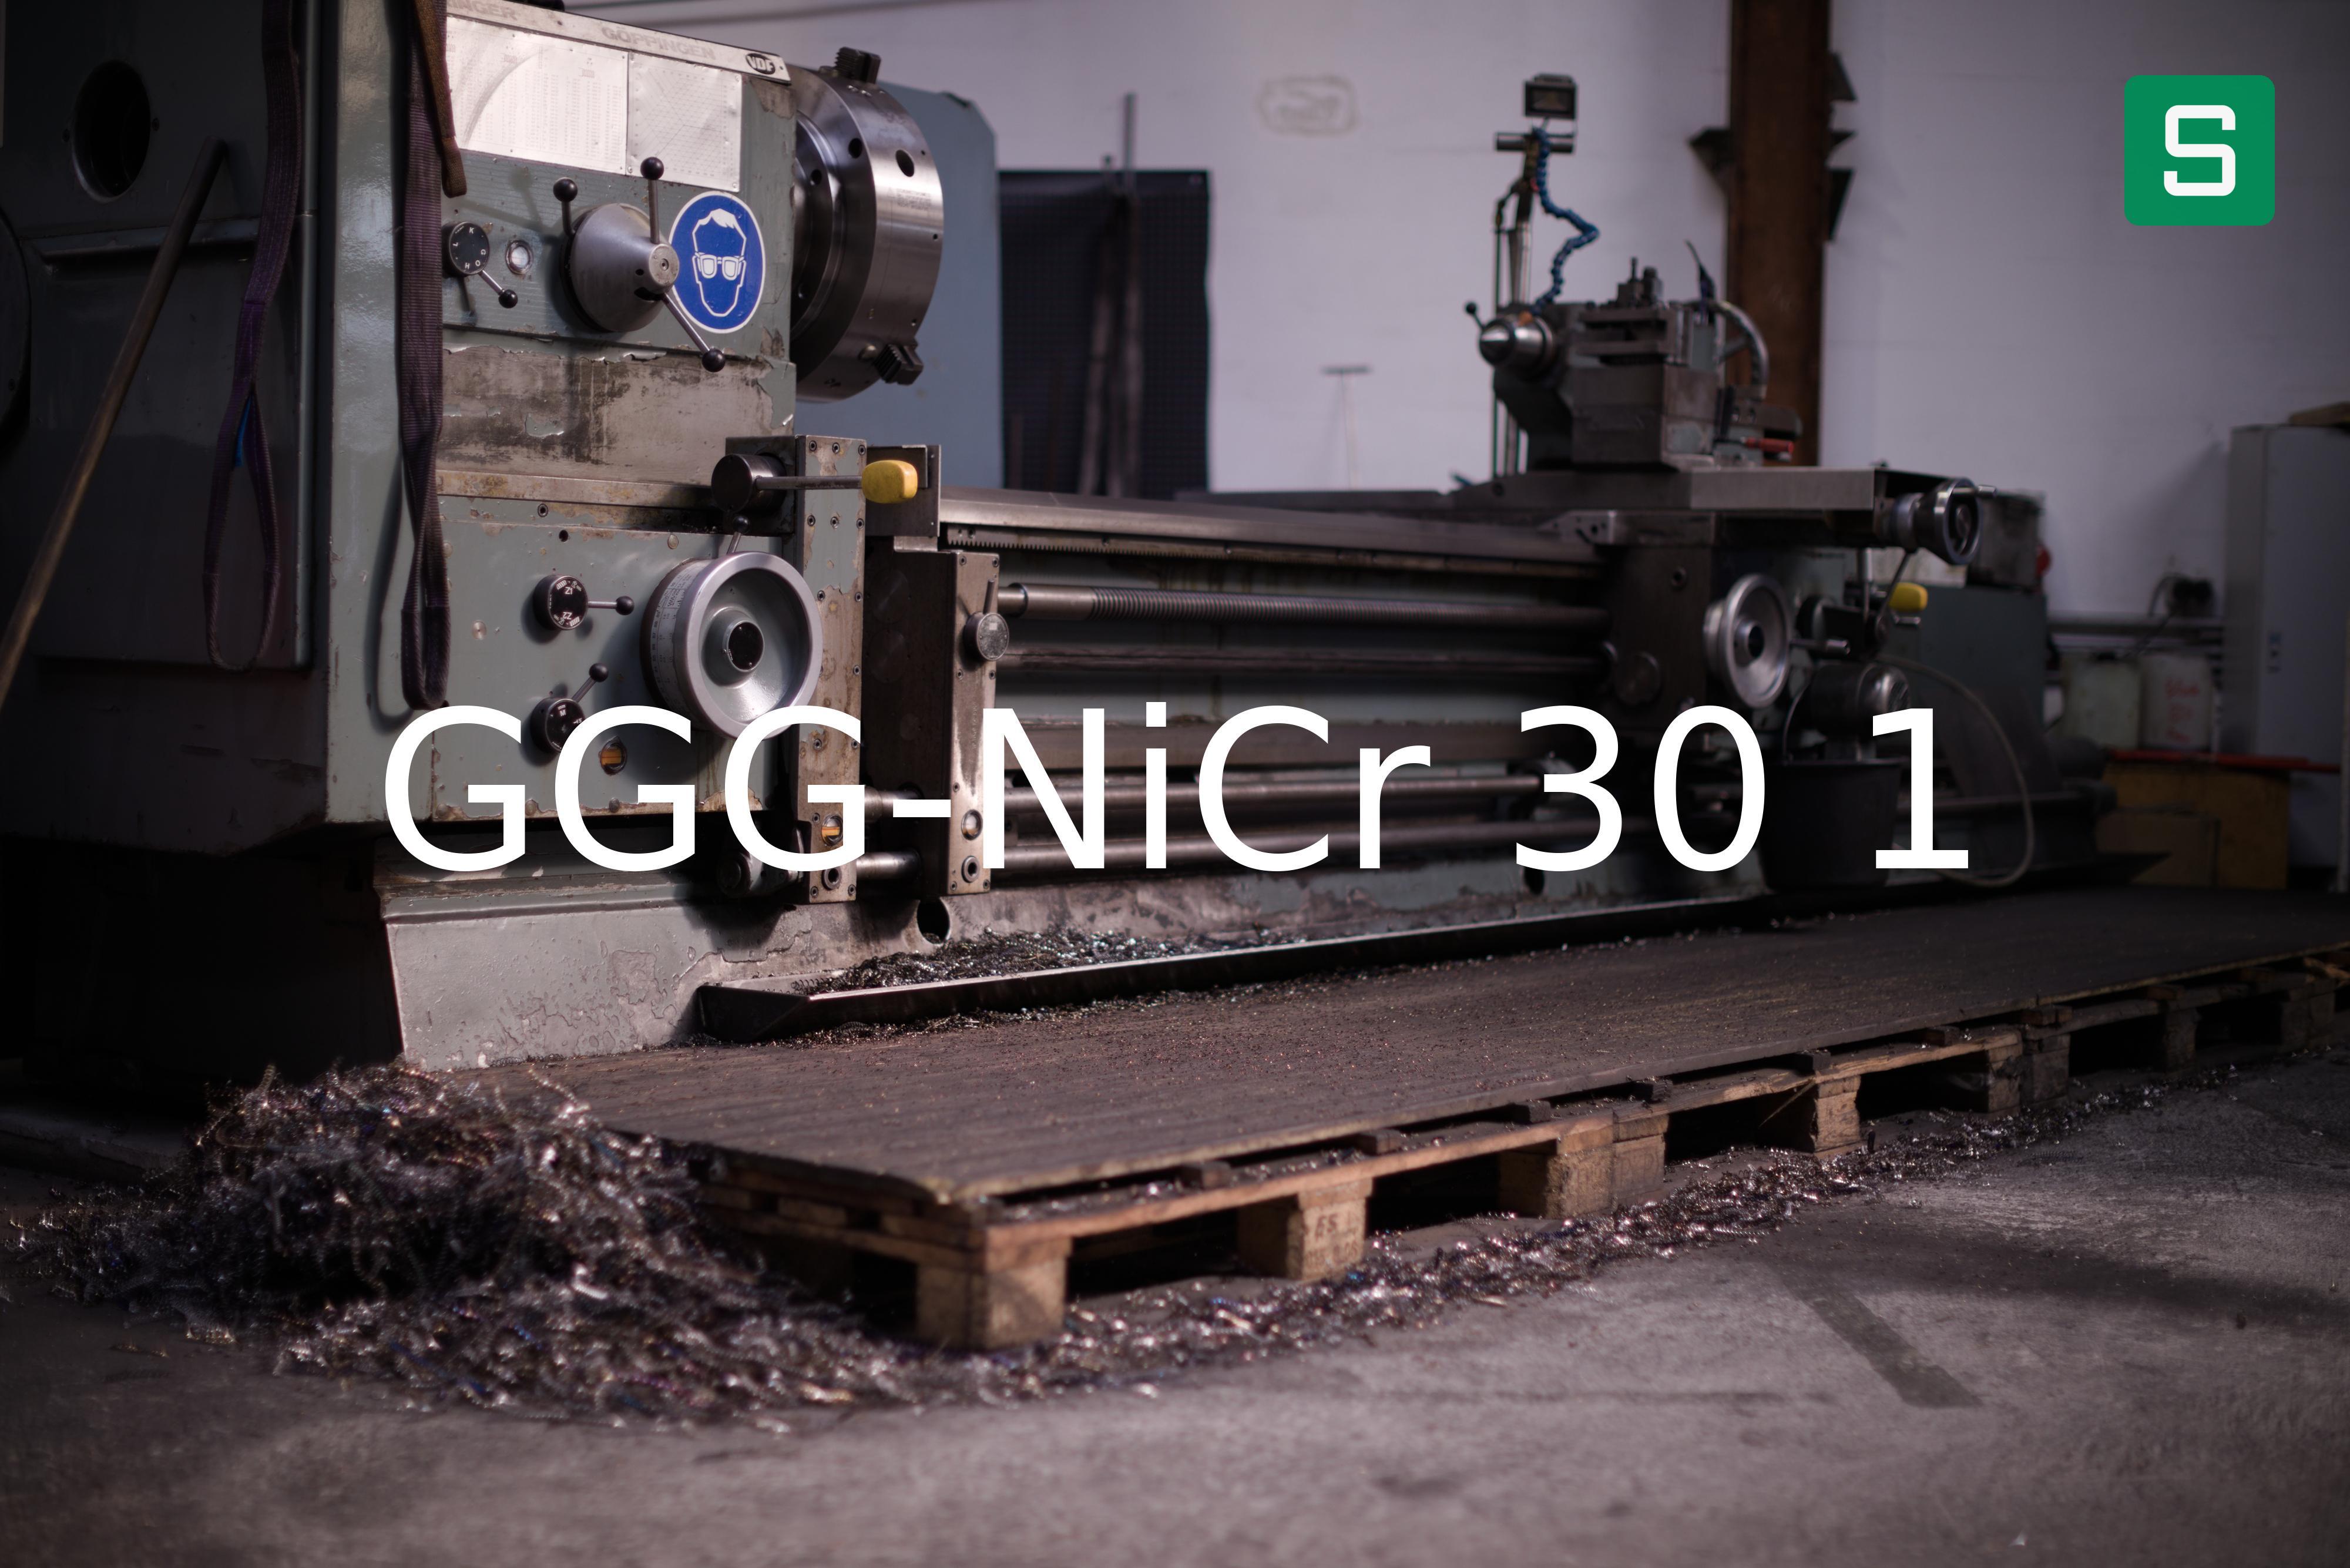 Material de Acero: GGG-NiCr 30 1